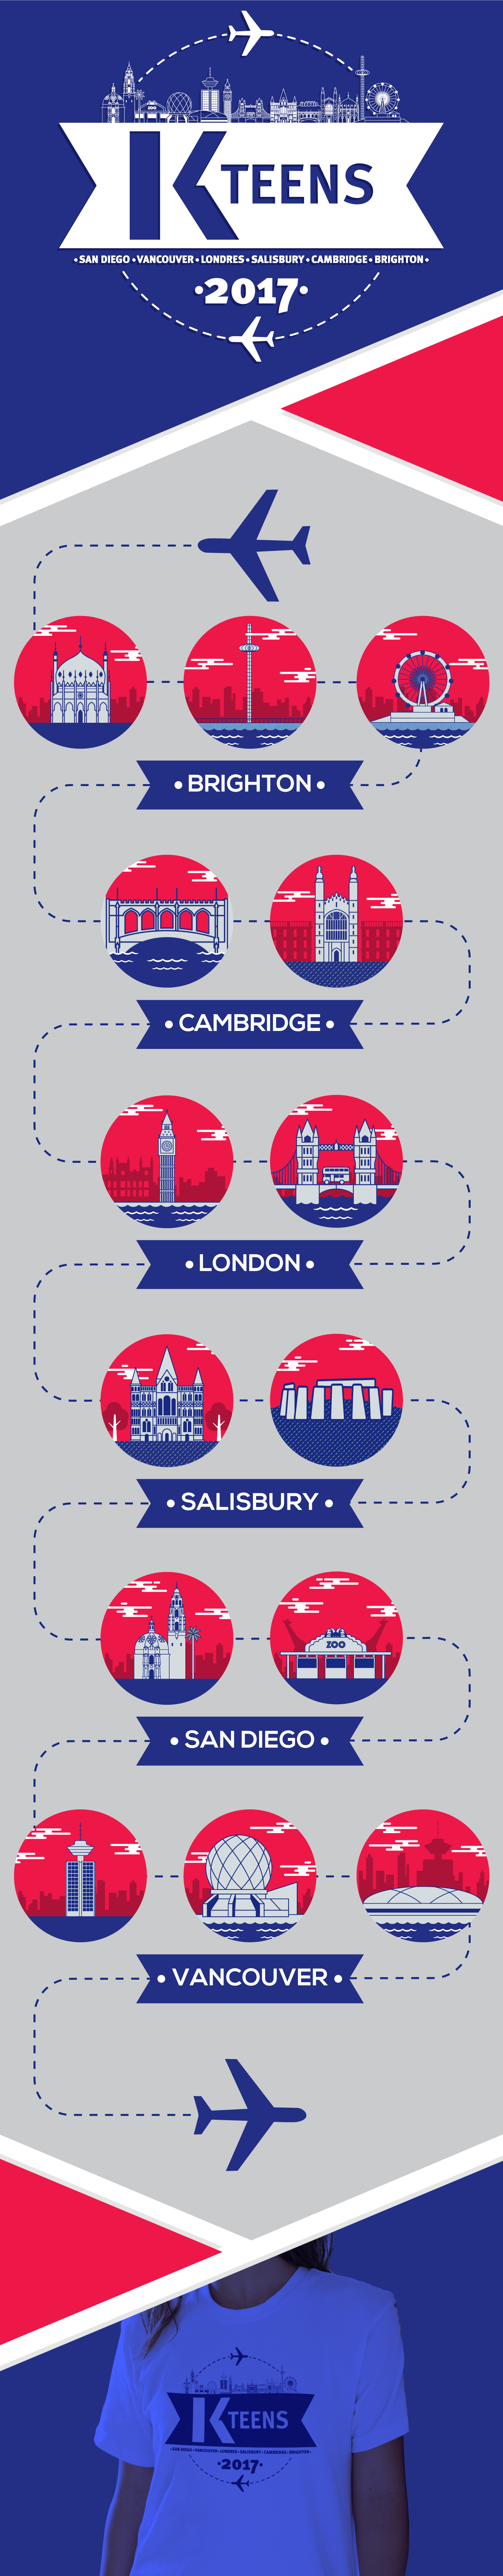 logo t-shirt Kaplan San Diego vancouver London Salisbury cambridge brighton kaplan international